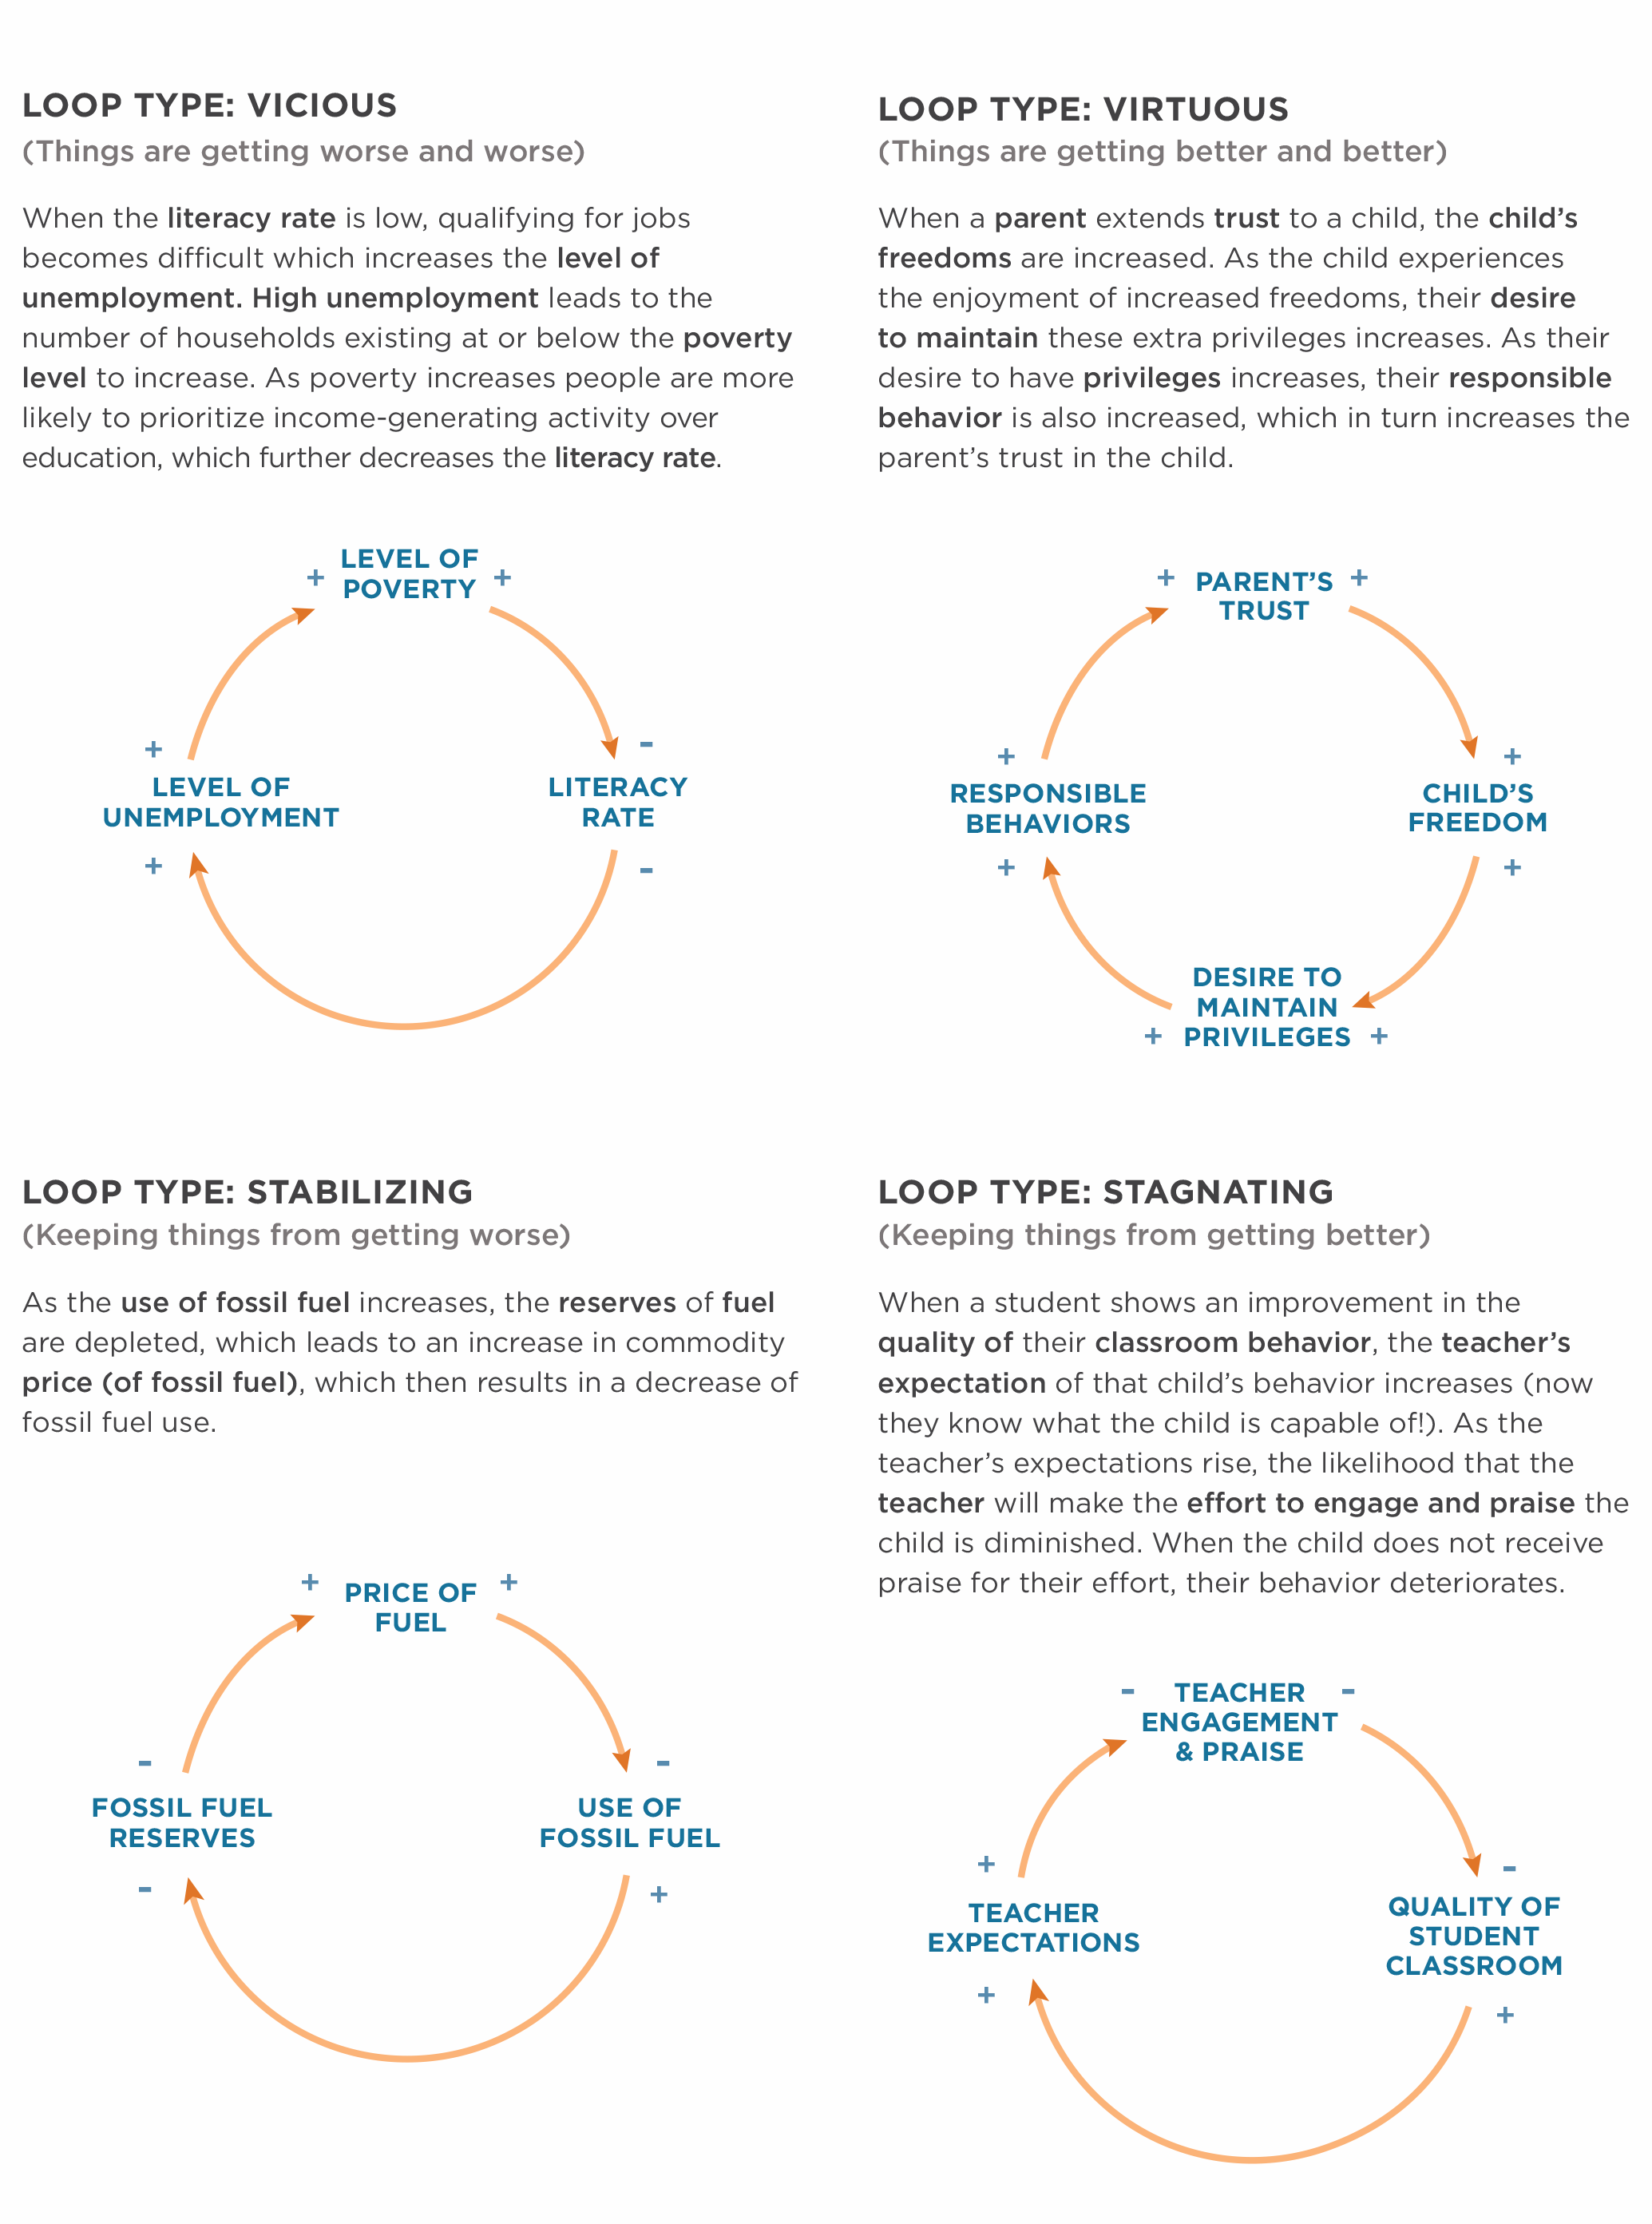 Diagram of different loop types